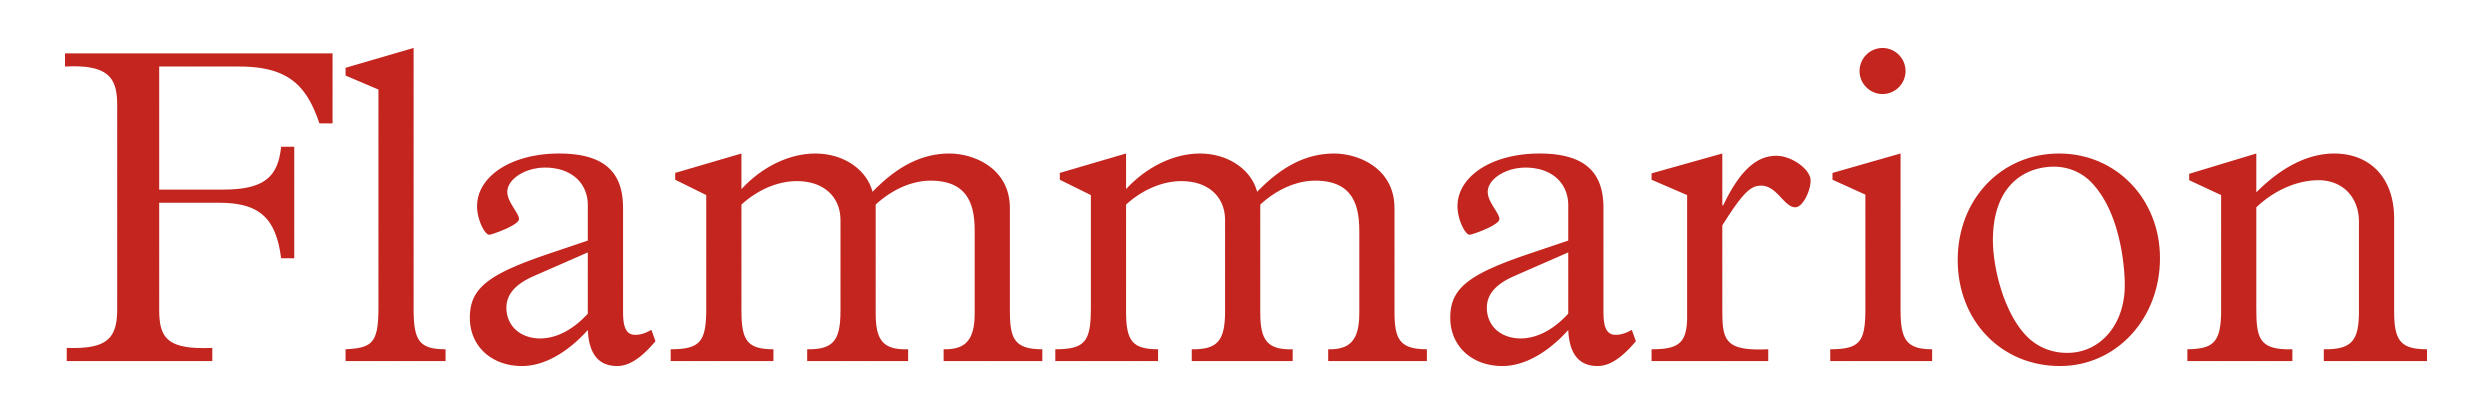 logo de Flammarion